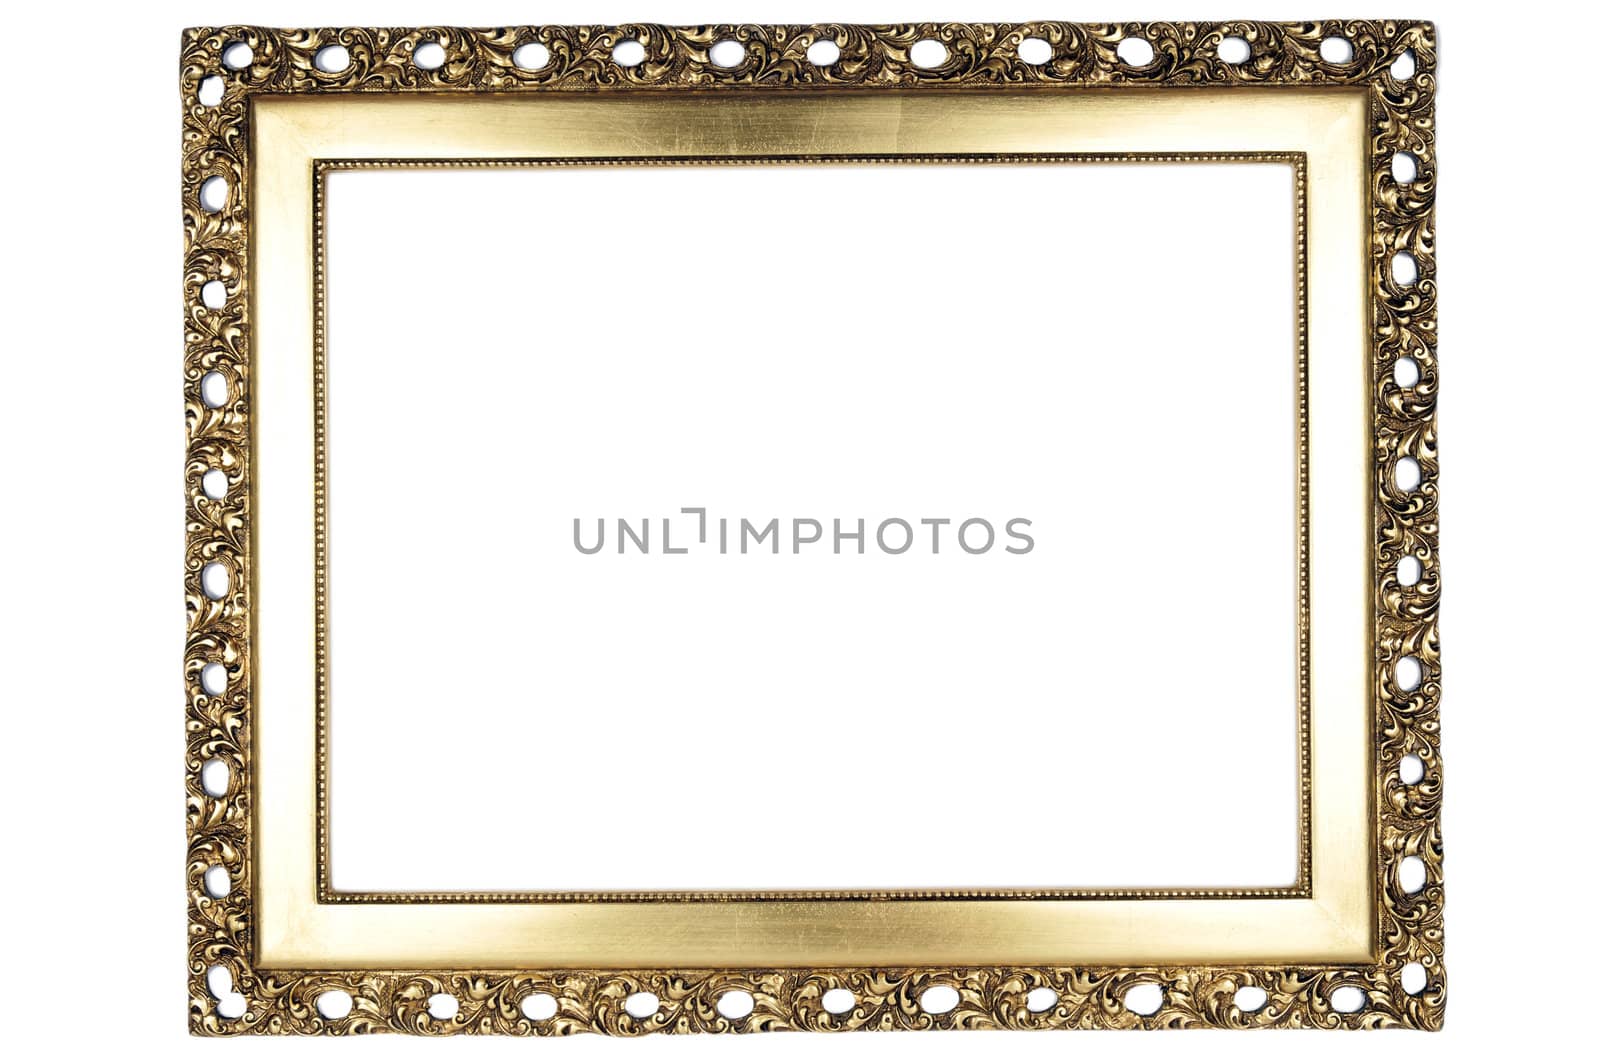 Gold square antique picture frame cutout art craft